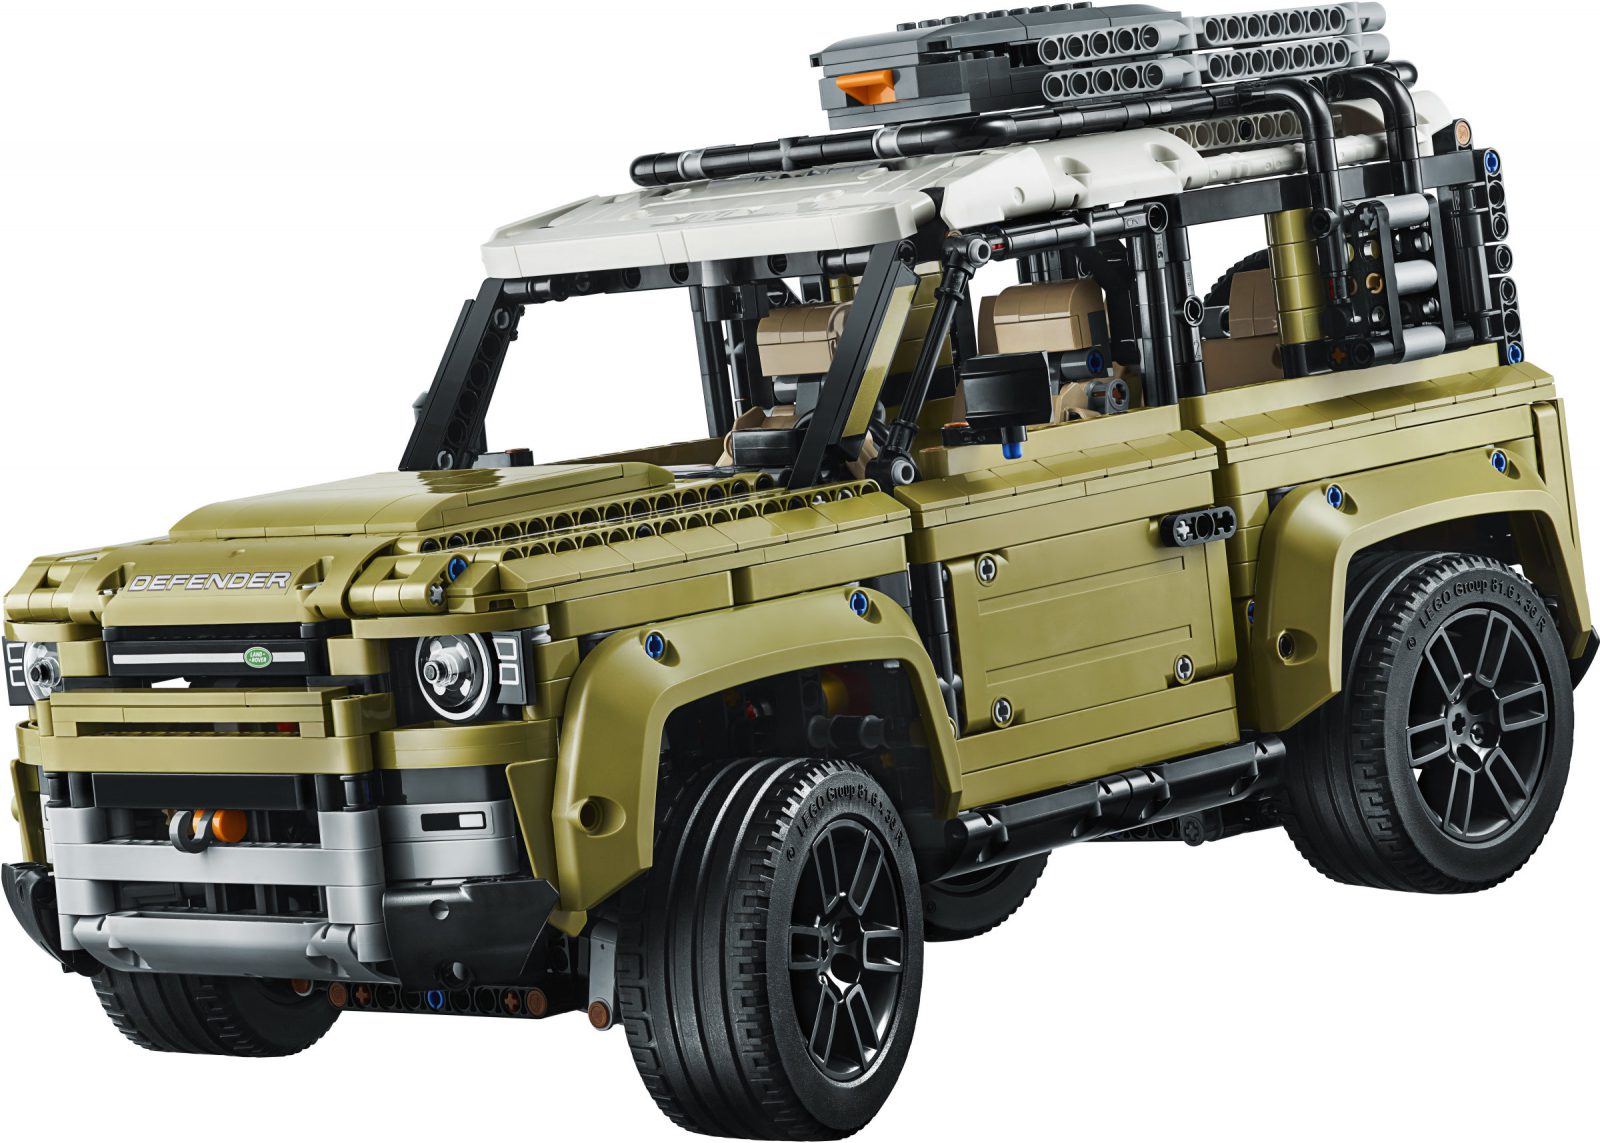 42110 Technic Land Rover Defender